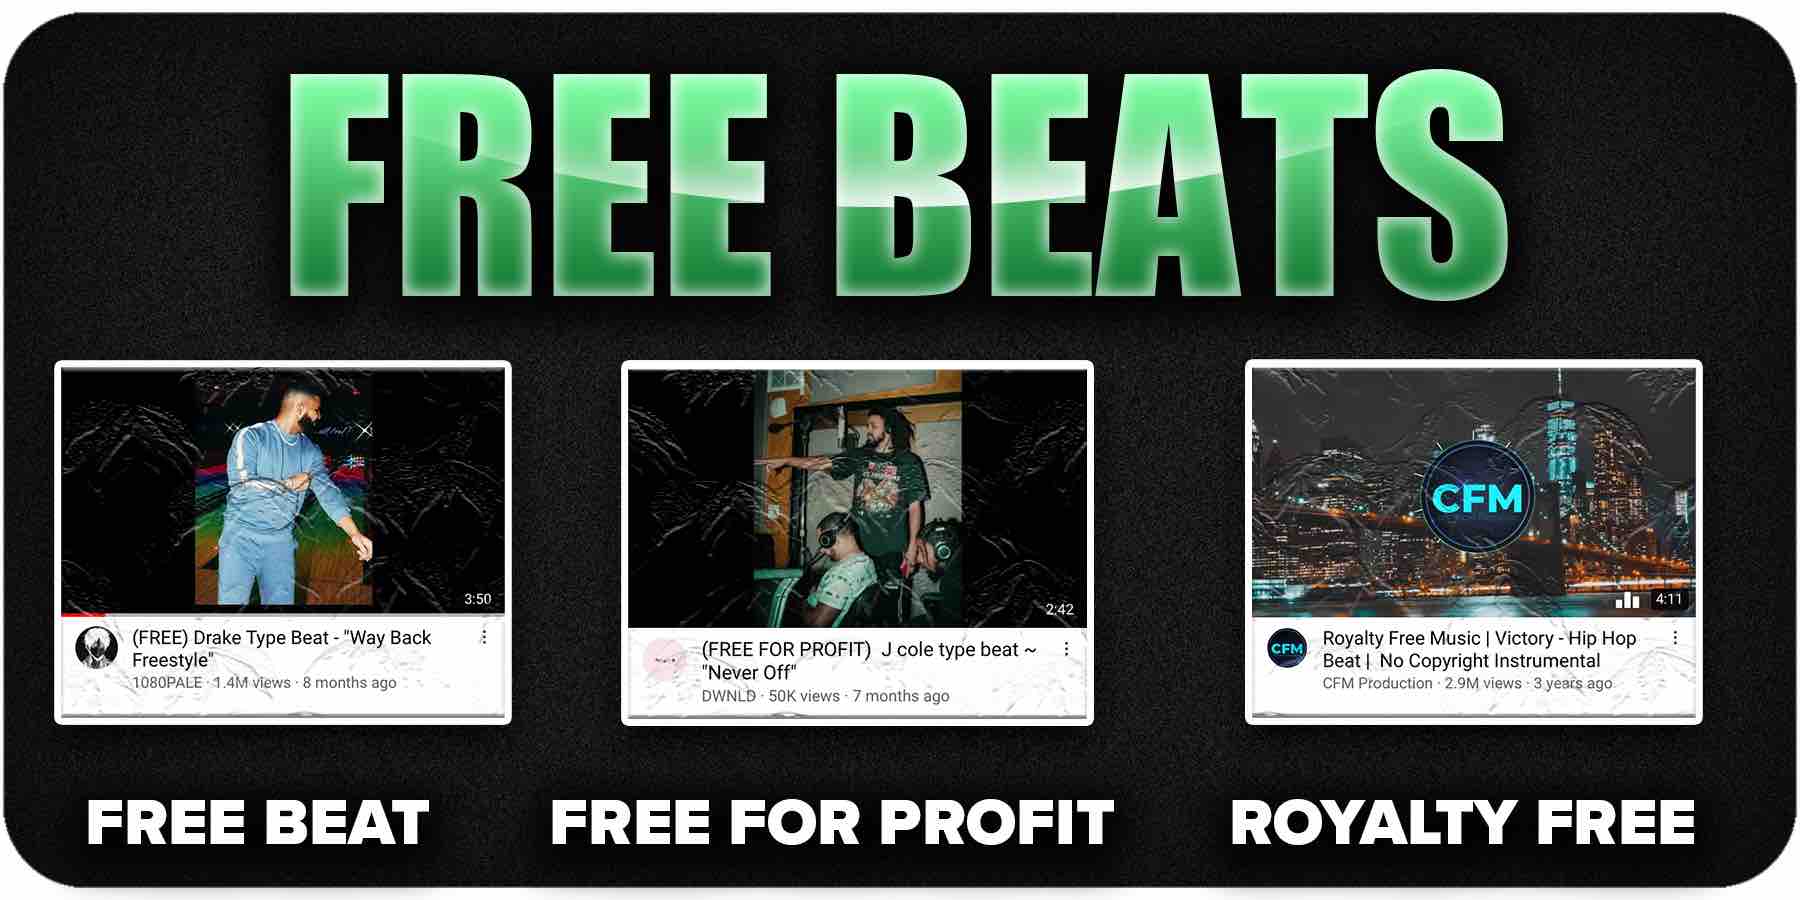 3 types of free beats